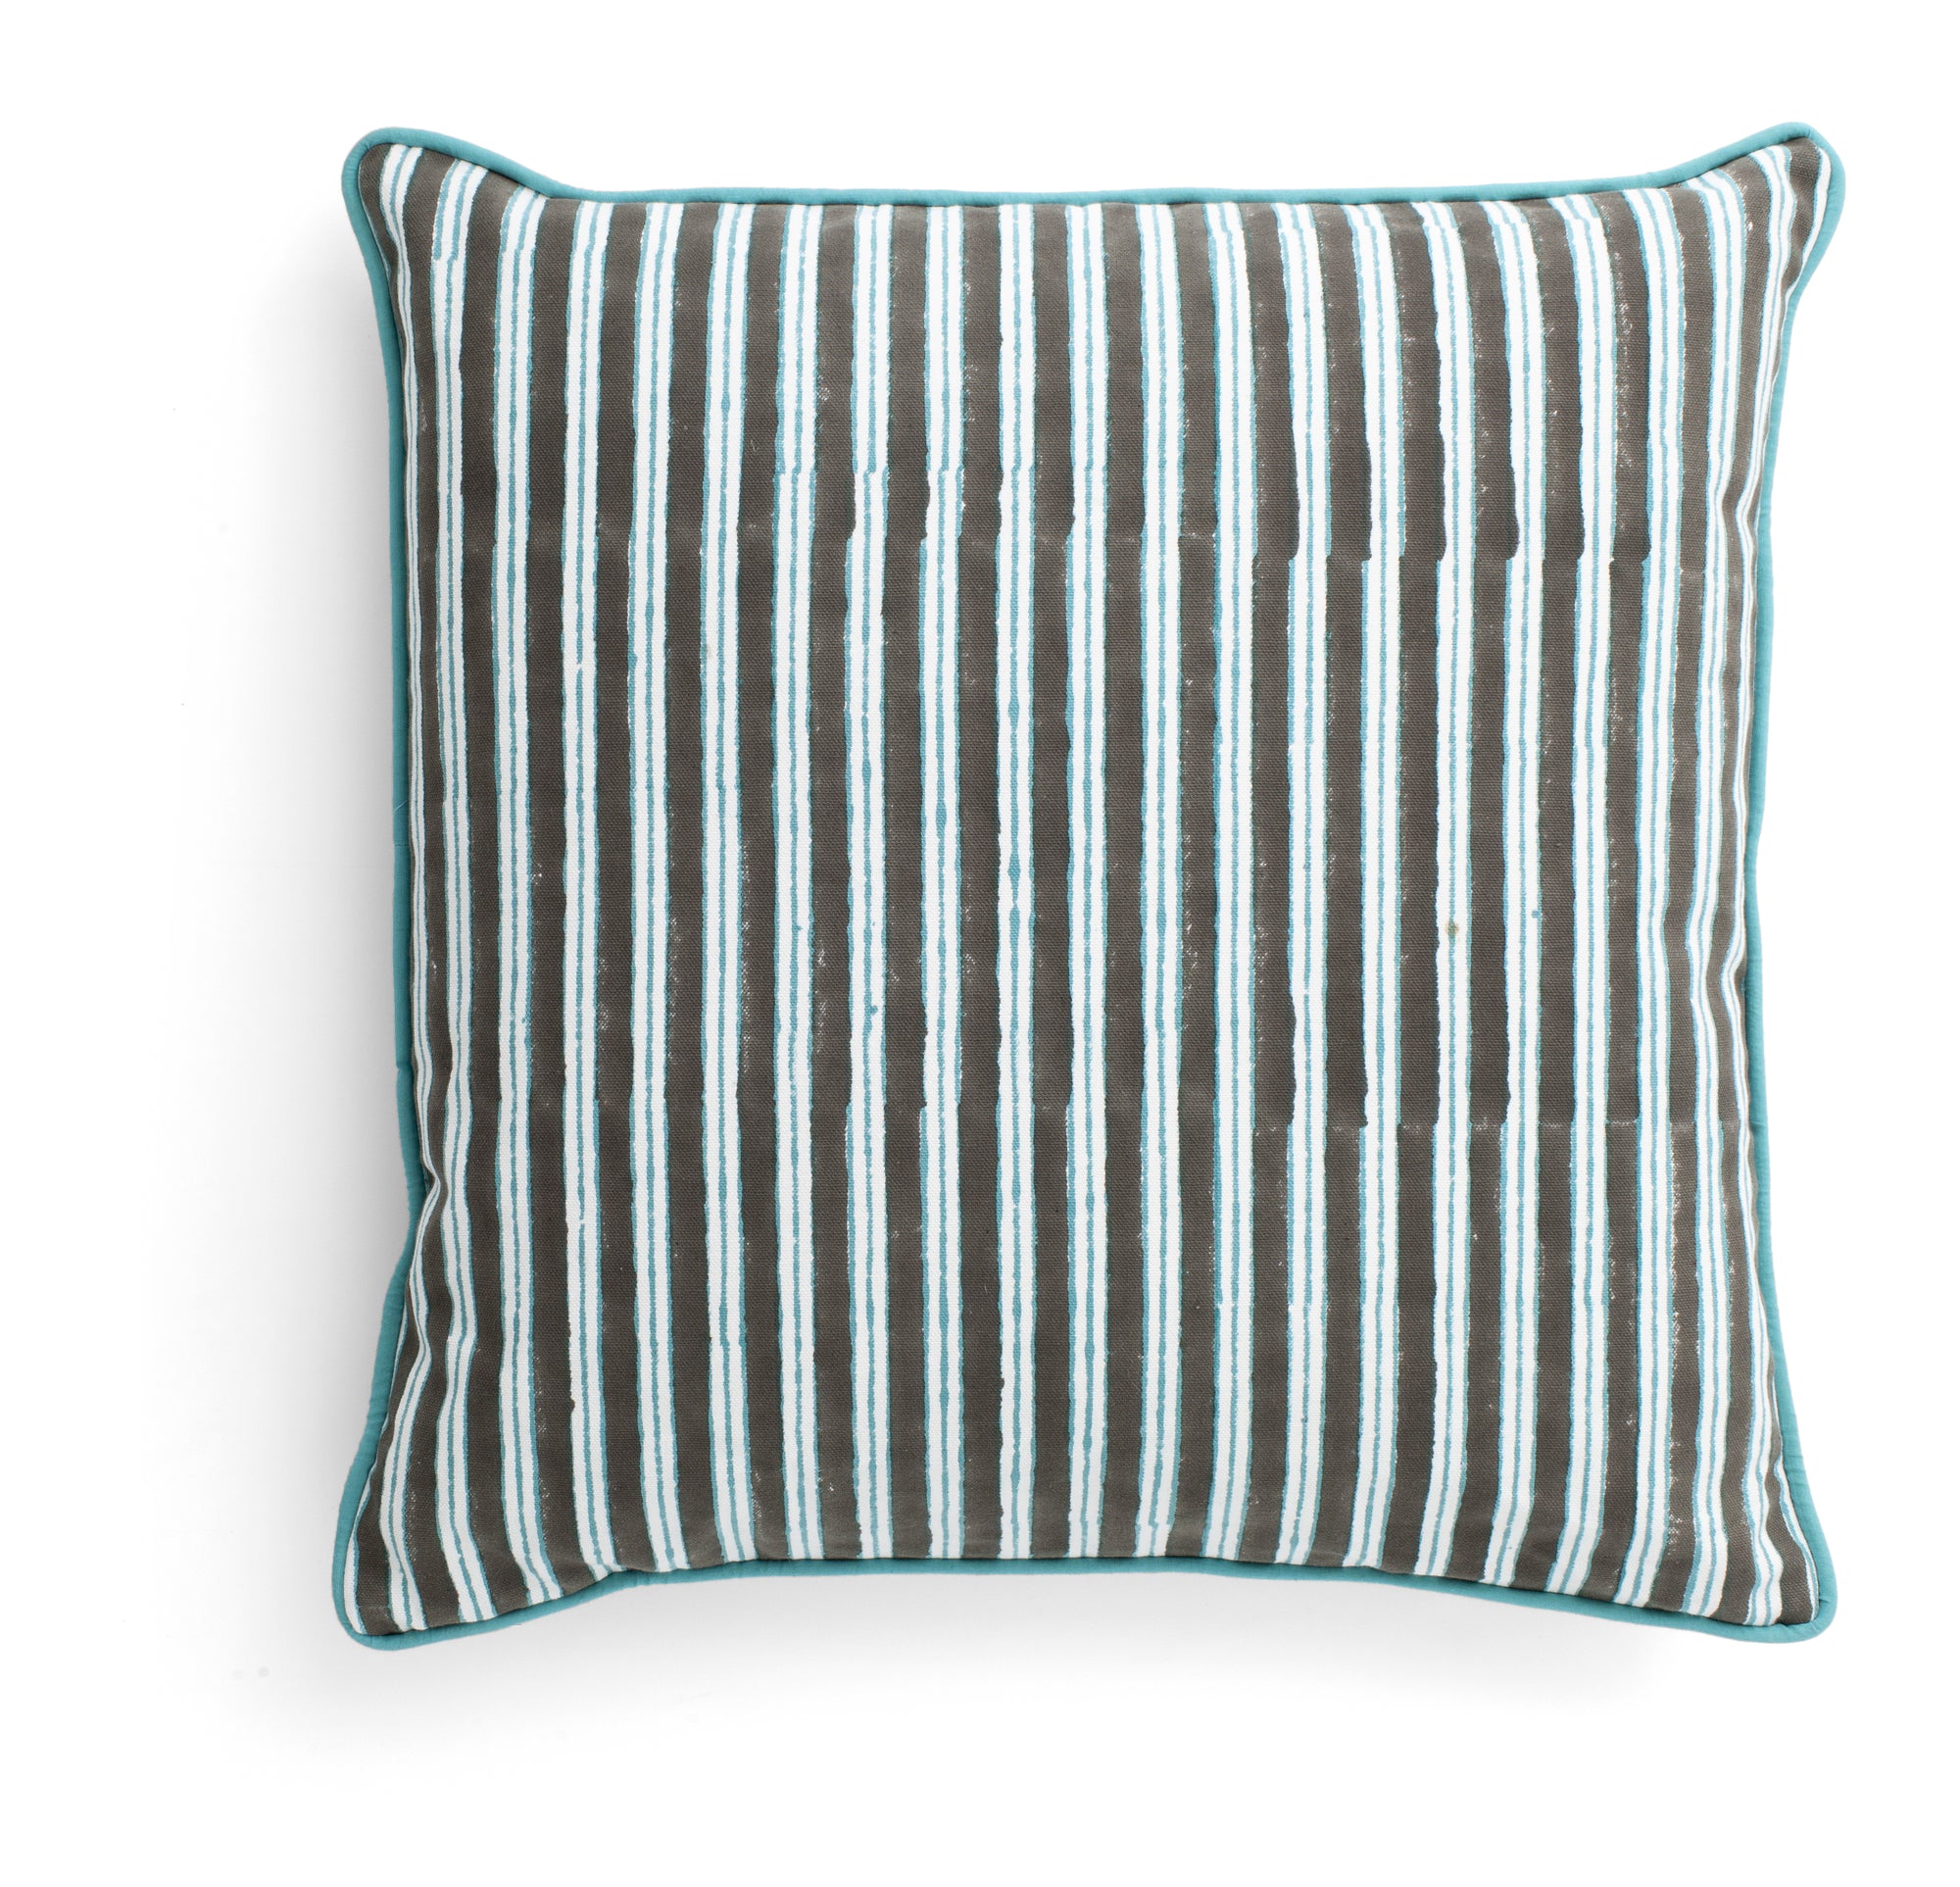 Cotton Cushion Cover Stripe Design - Turquoise